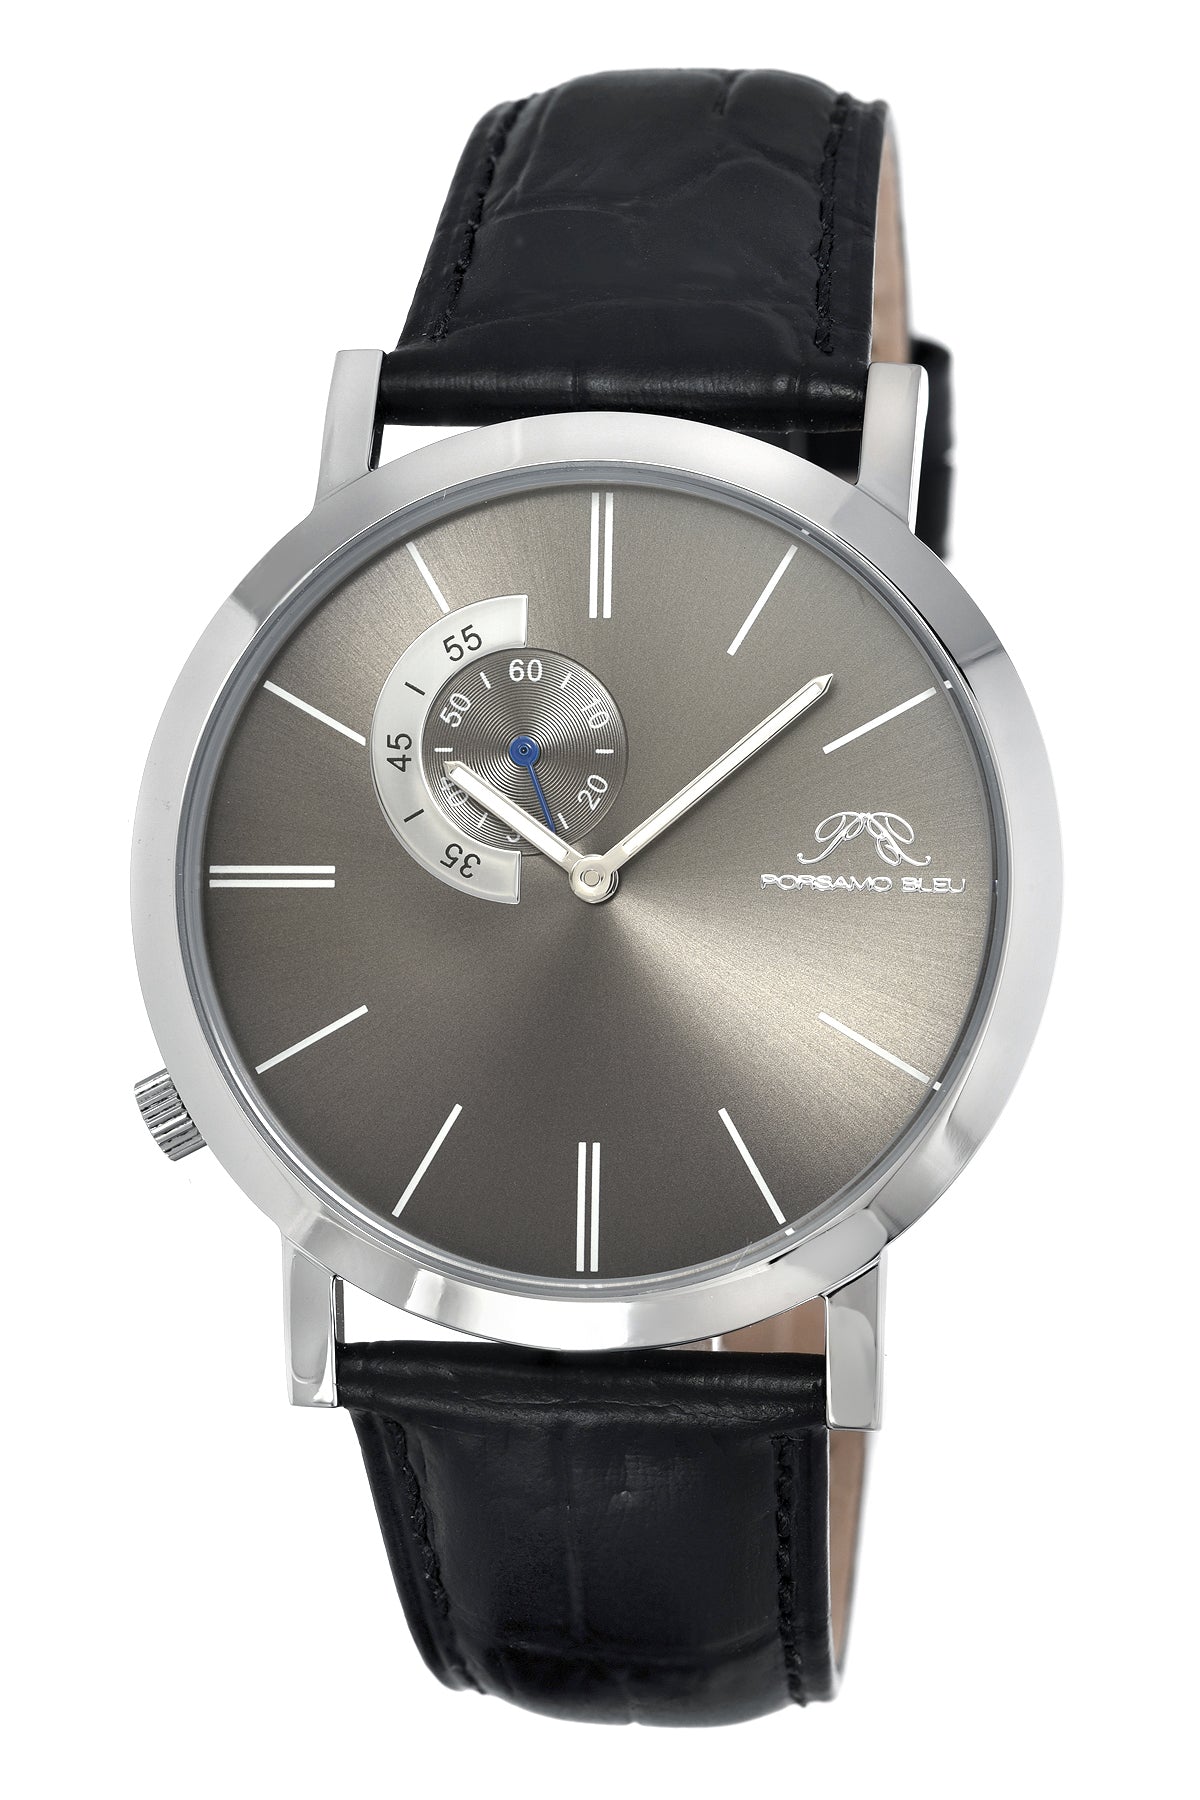 Porsamo Bleu Parker luxury men's watch, genuine leather band, silver, black, grey 832APAL